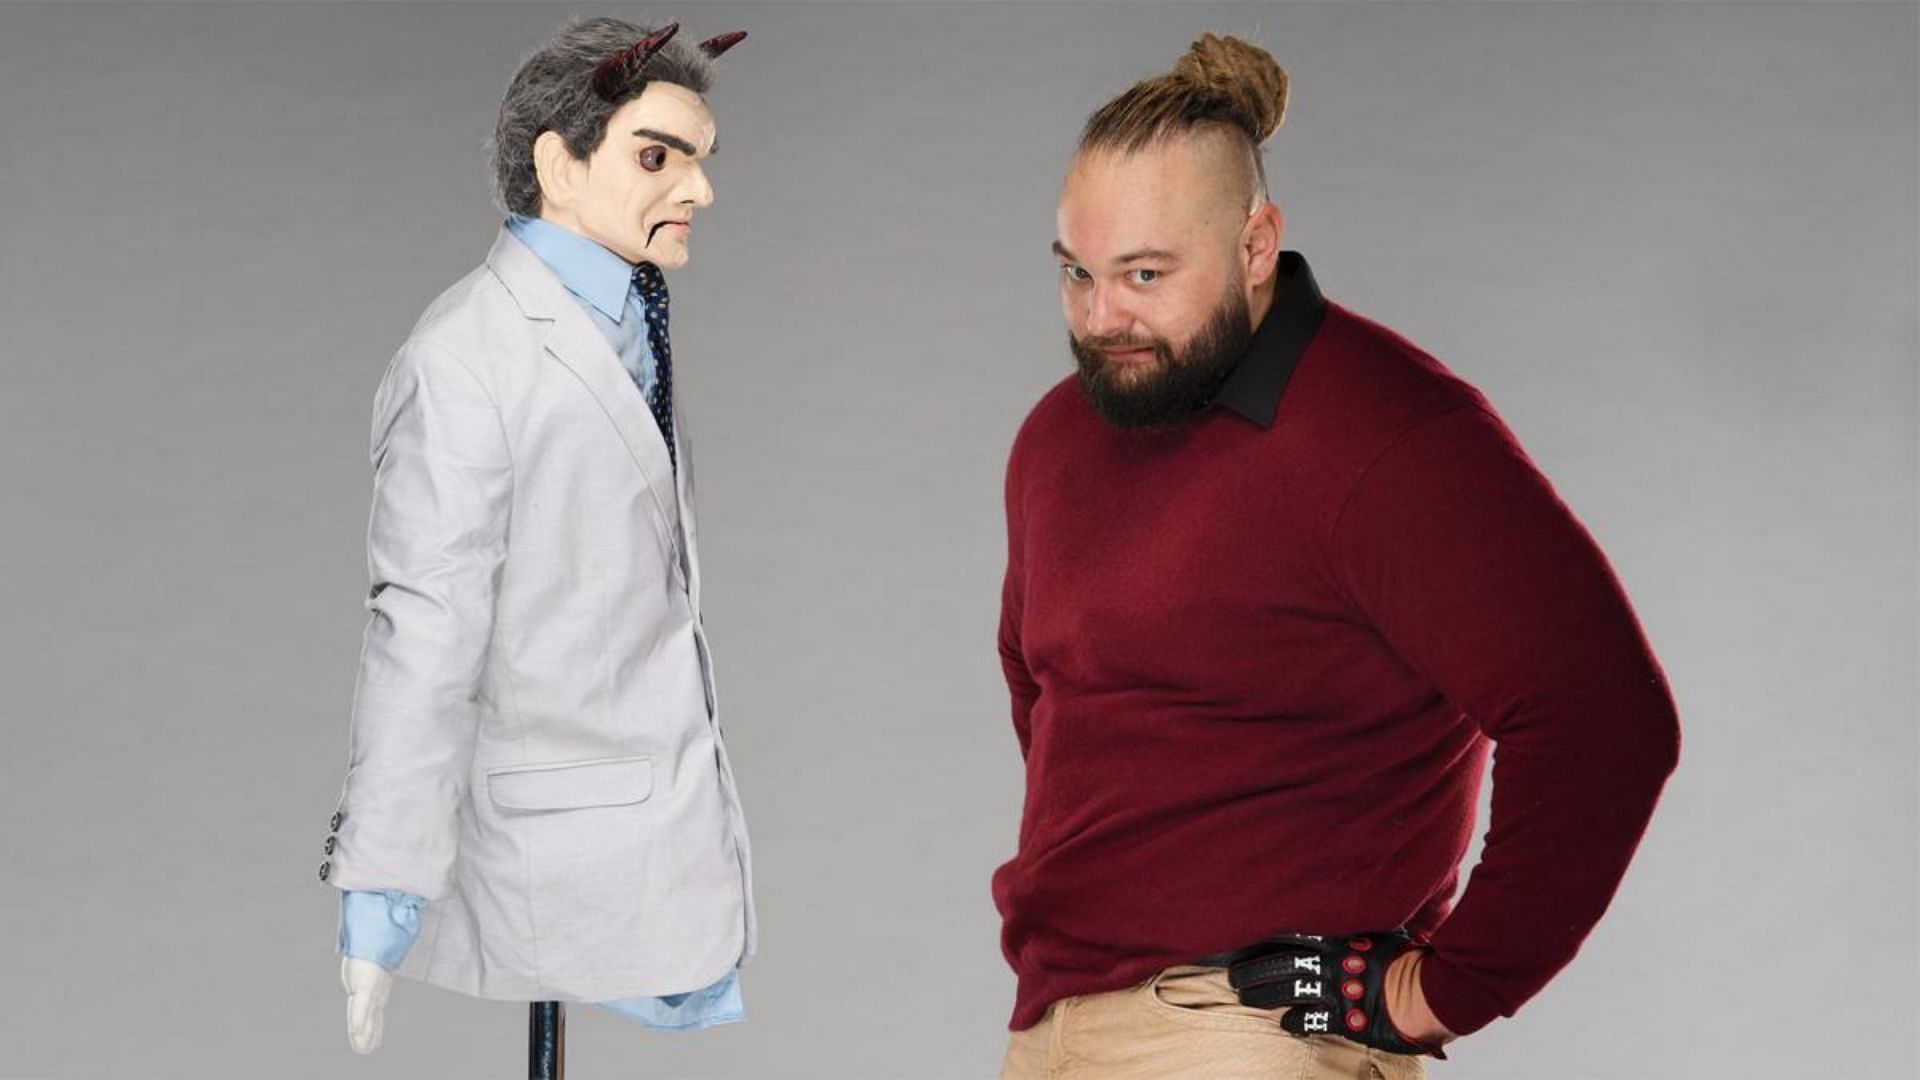 Bray Wyatt with the Mr. McBossman puppet